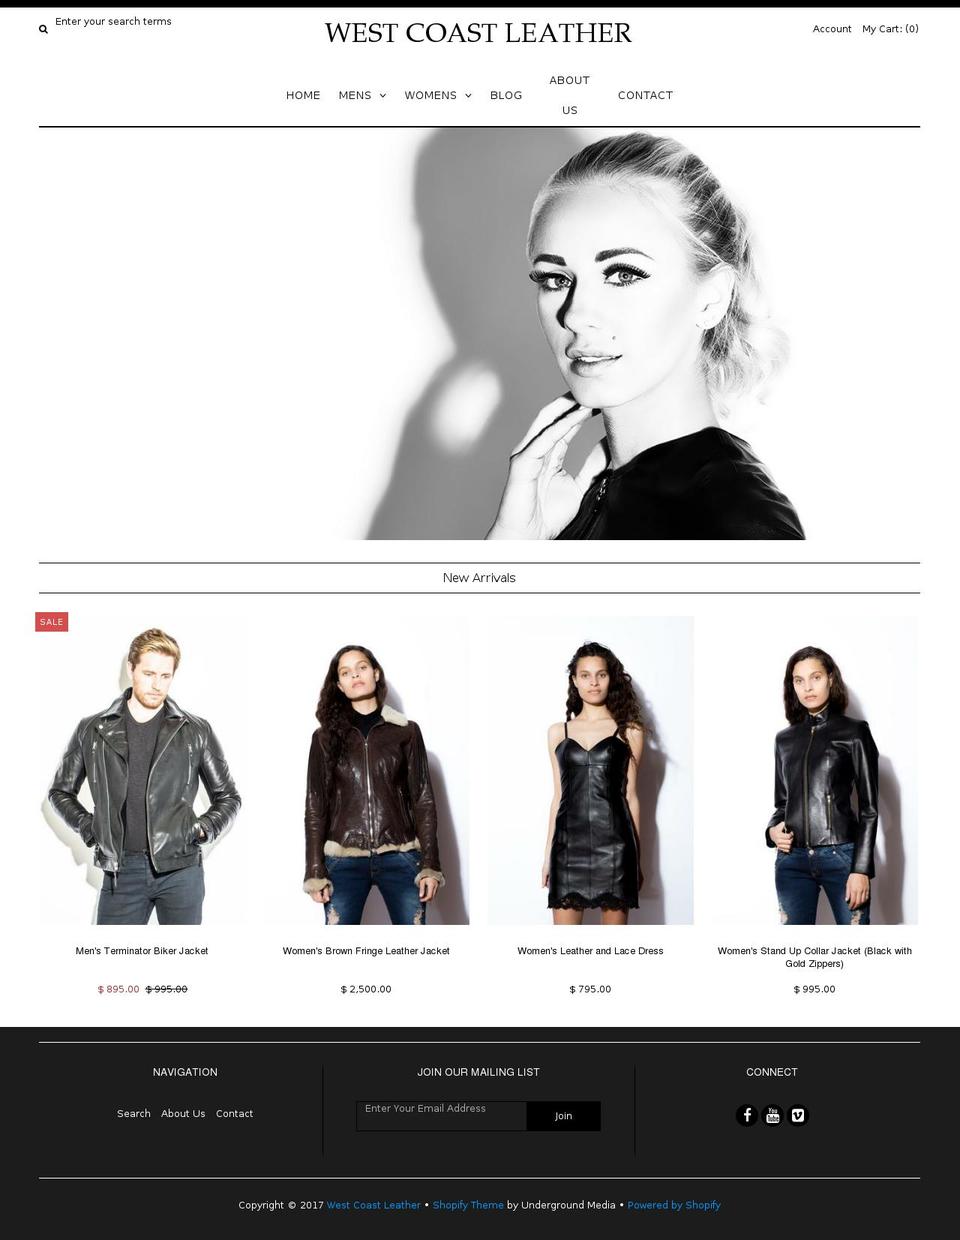 Venue Shopify theme site example westcoastleather.com